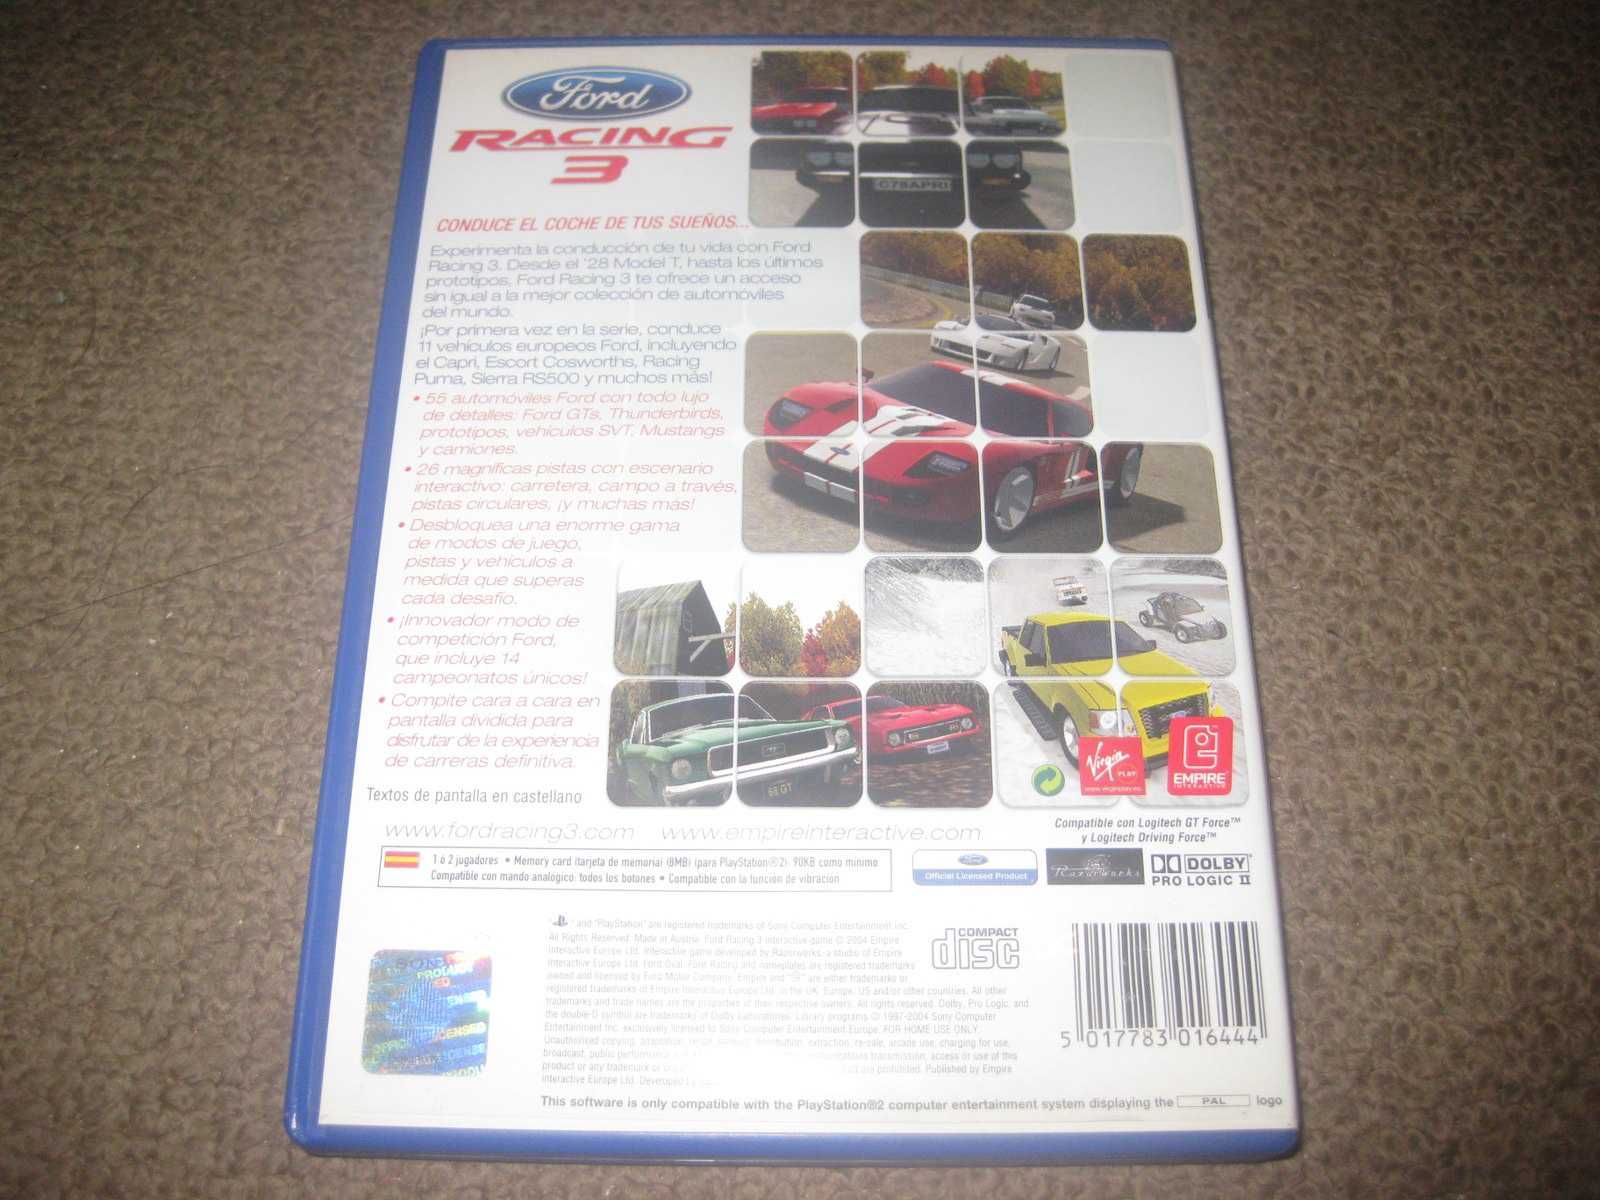 Jogo "Ford Racing 3" para Playstation 2/Completo!